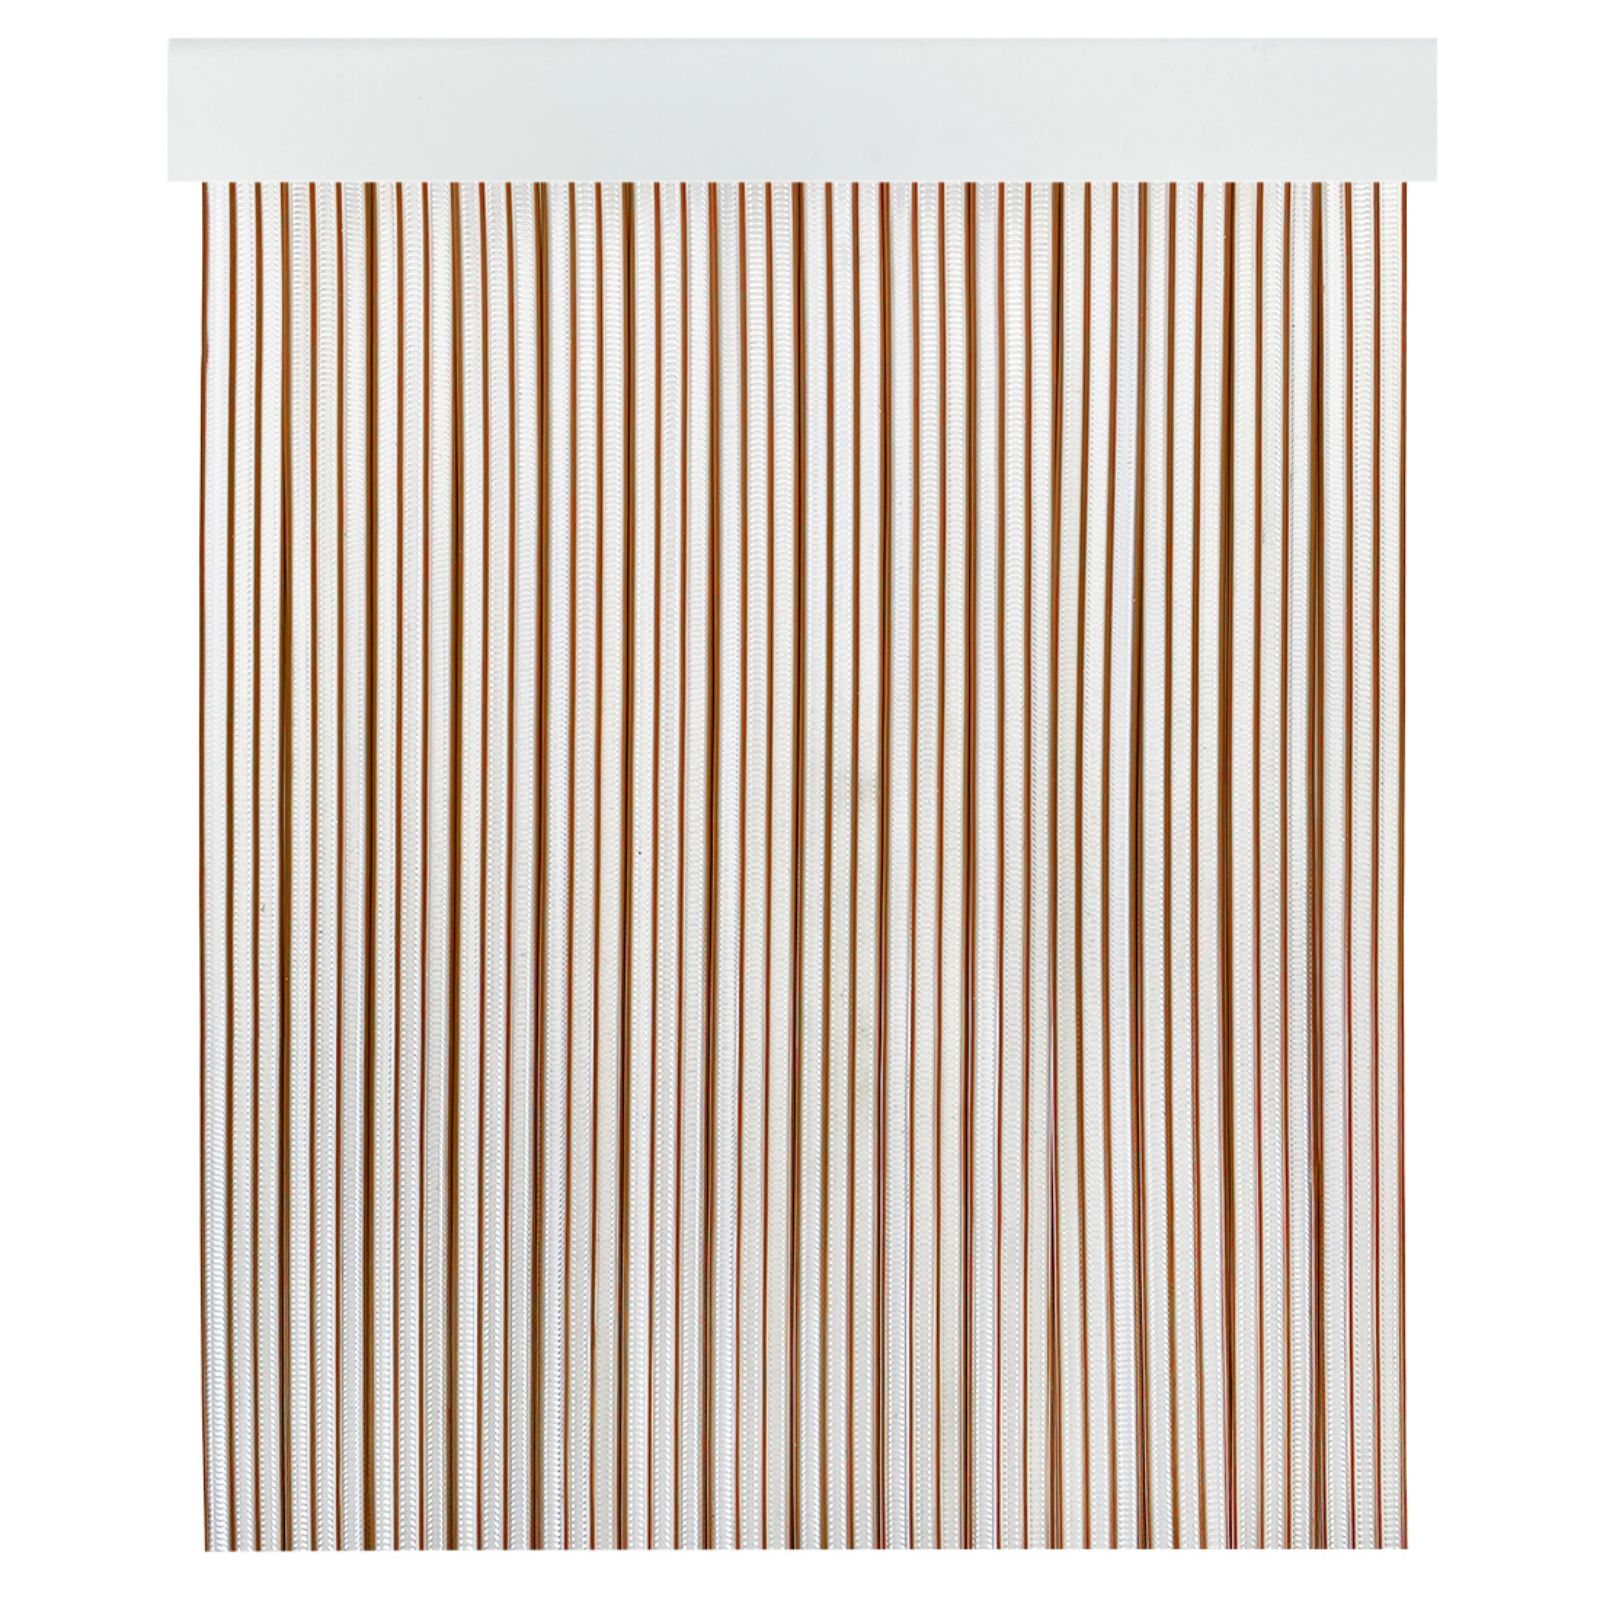 Imagen de Cortina exterior mosquitera transparente marrón 90x210, 120x210